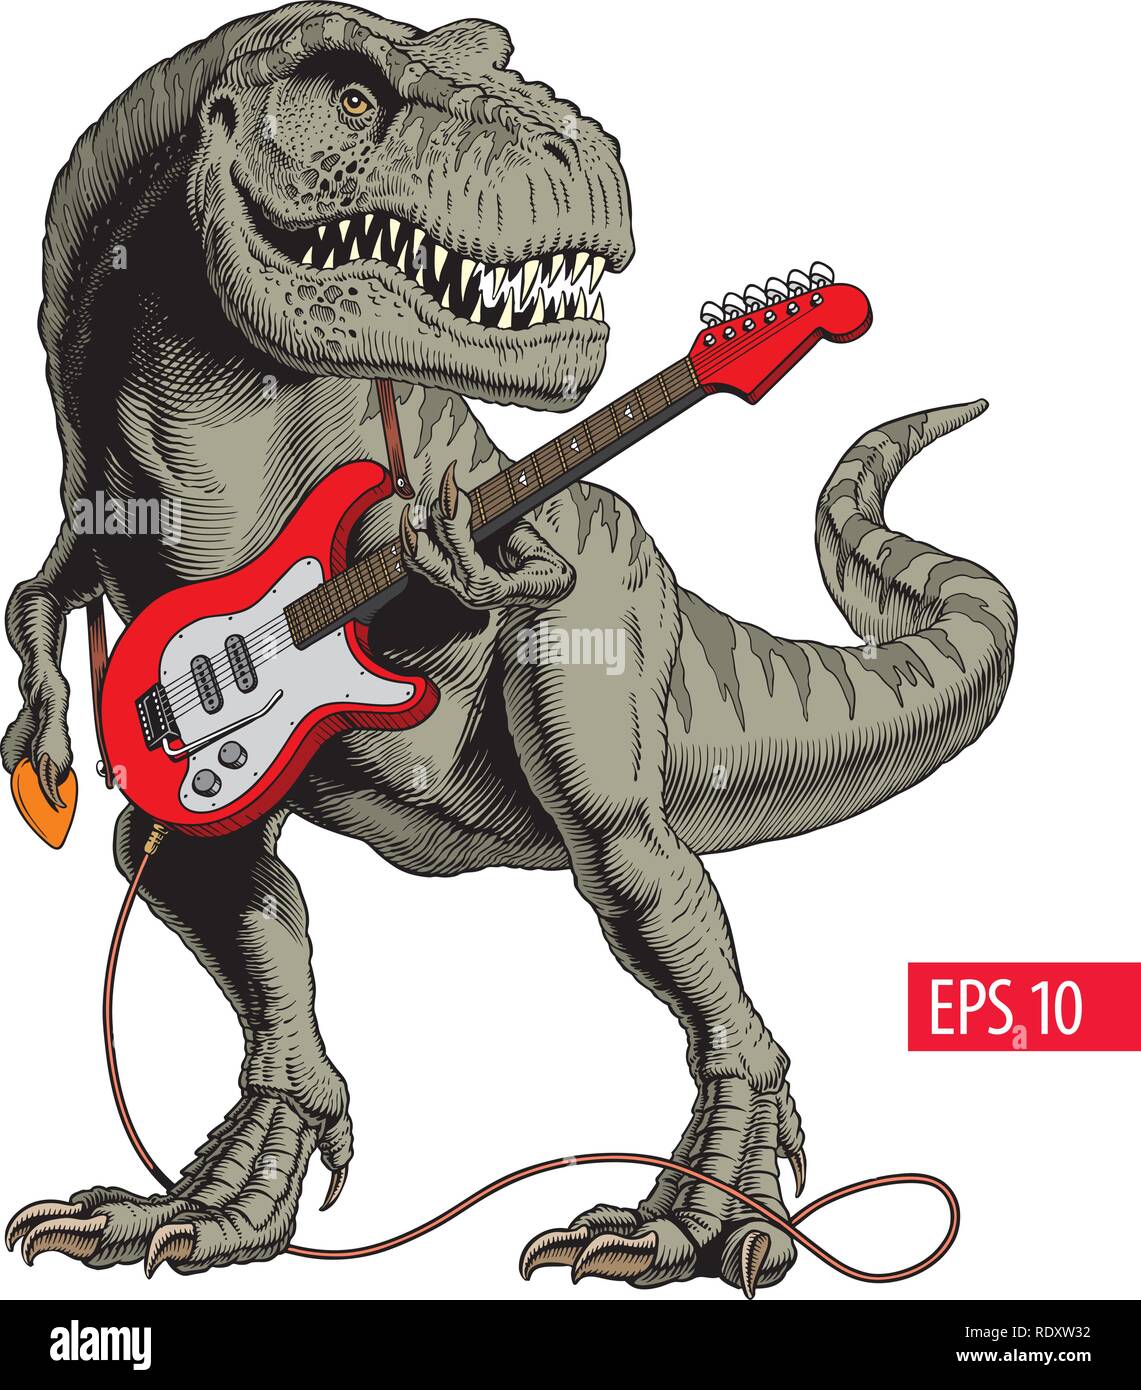 Dinosaur playing electric guitar. Tyrannosaurus or T. rex. Vector illustration. Stock Vector